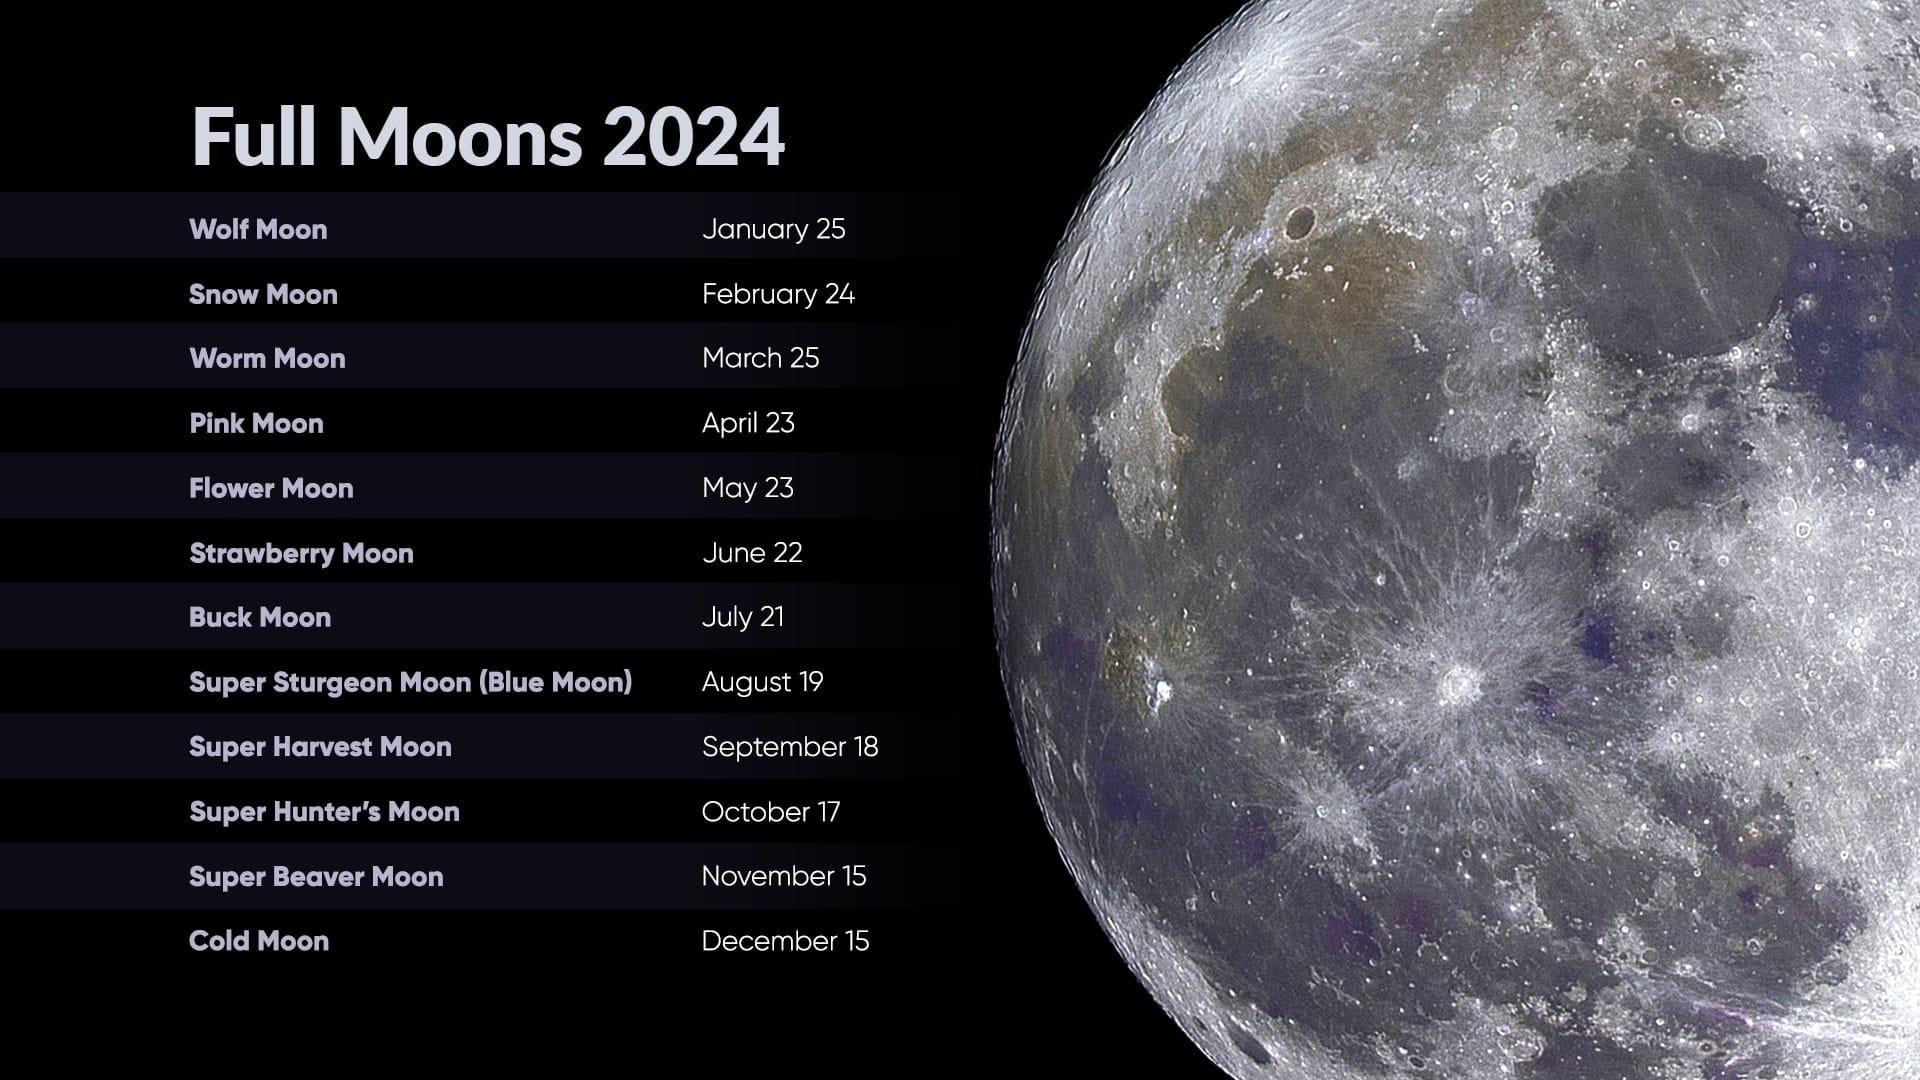 Next Full Moon | February Full Moon 2024 | Full Moon Schedule 2024 in July 2024 Full Moon Calendar